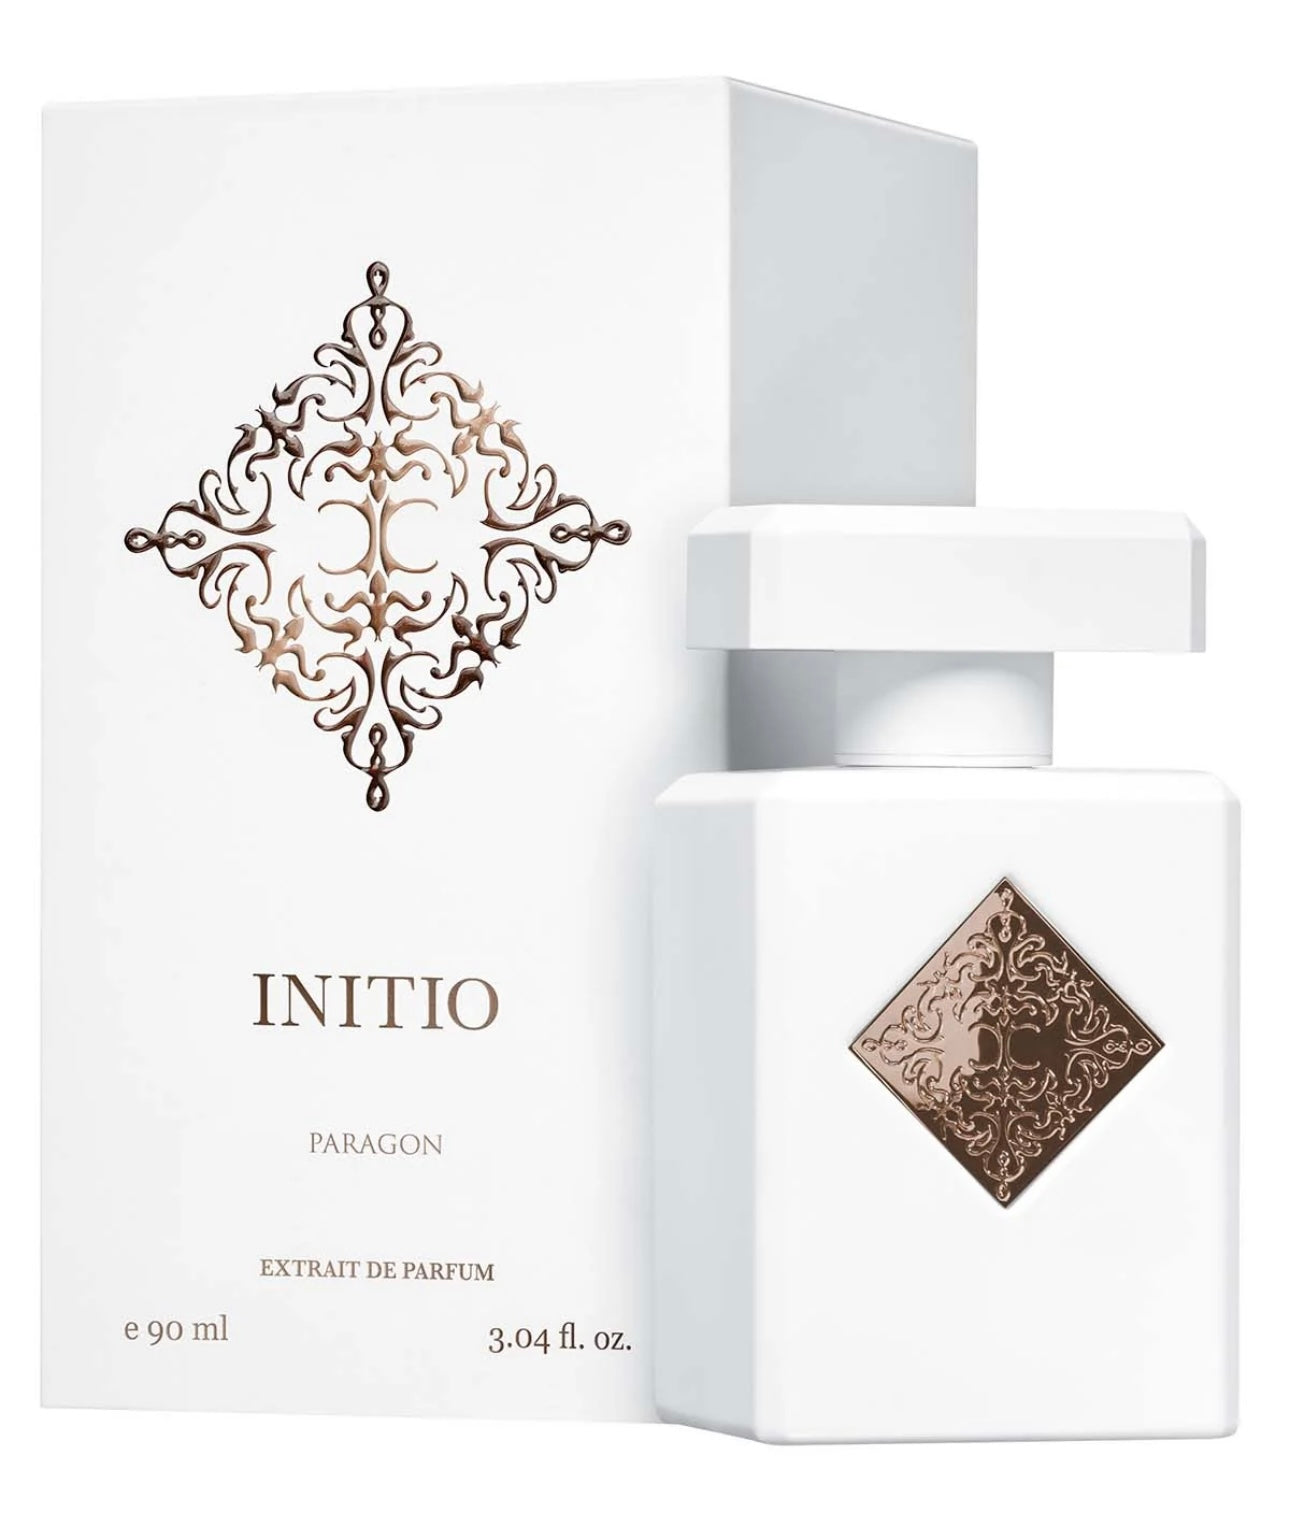 Initio- Paragon-Extrait De Parfum